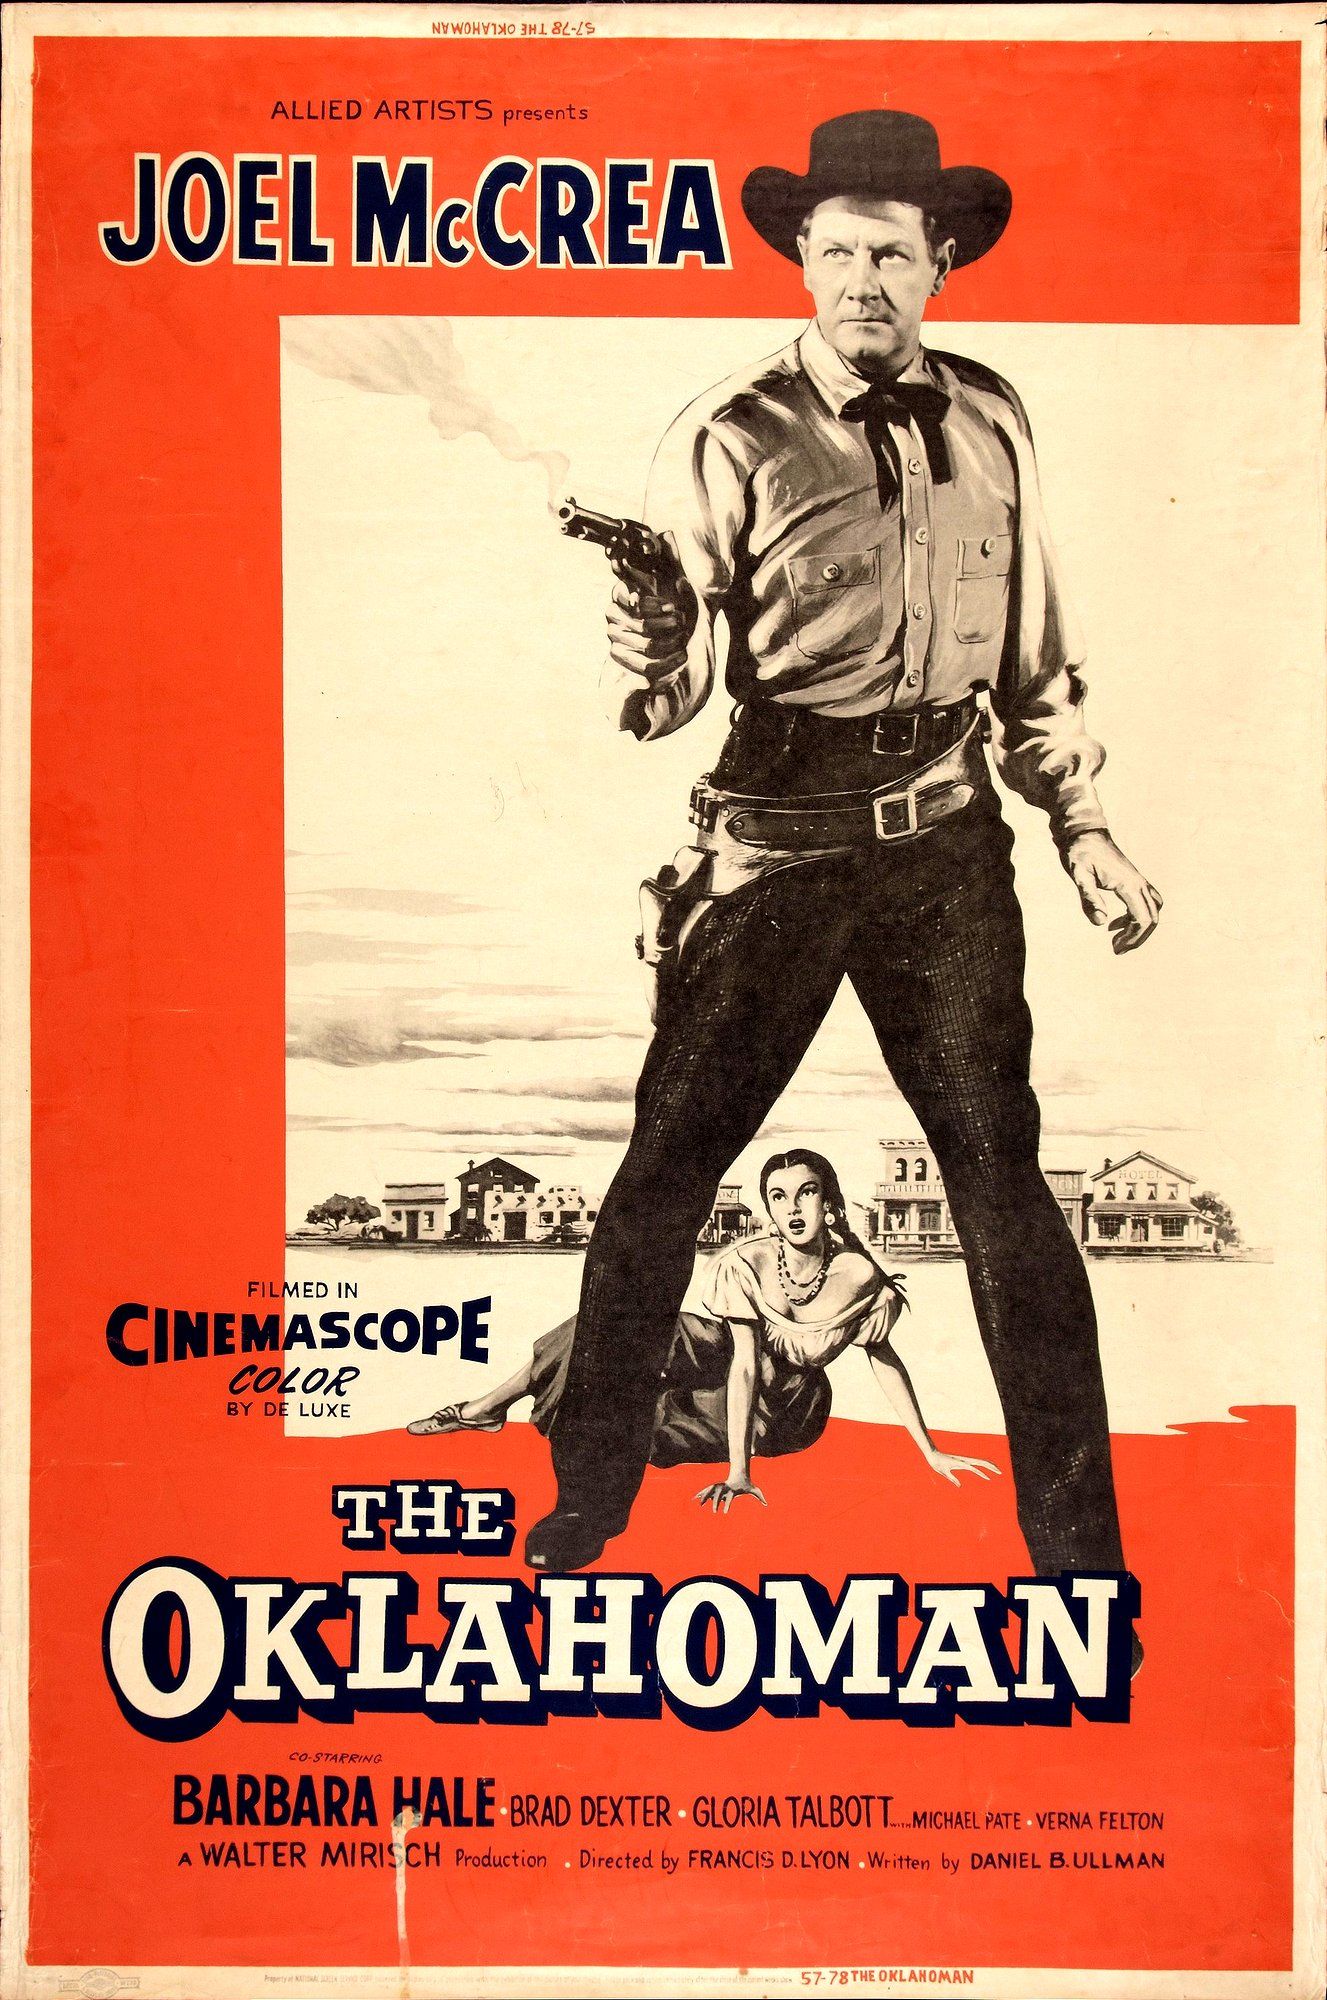 The Oklahoman 1957